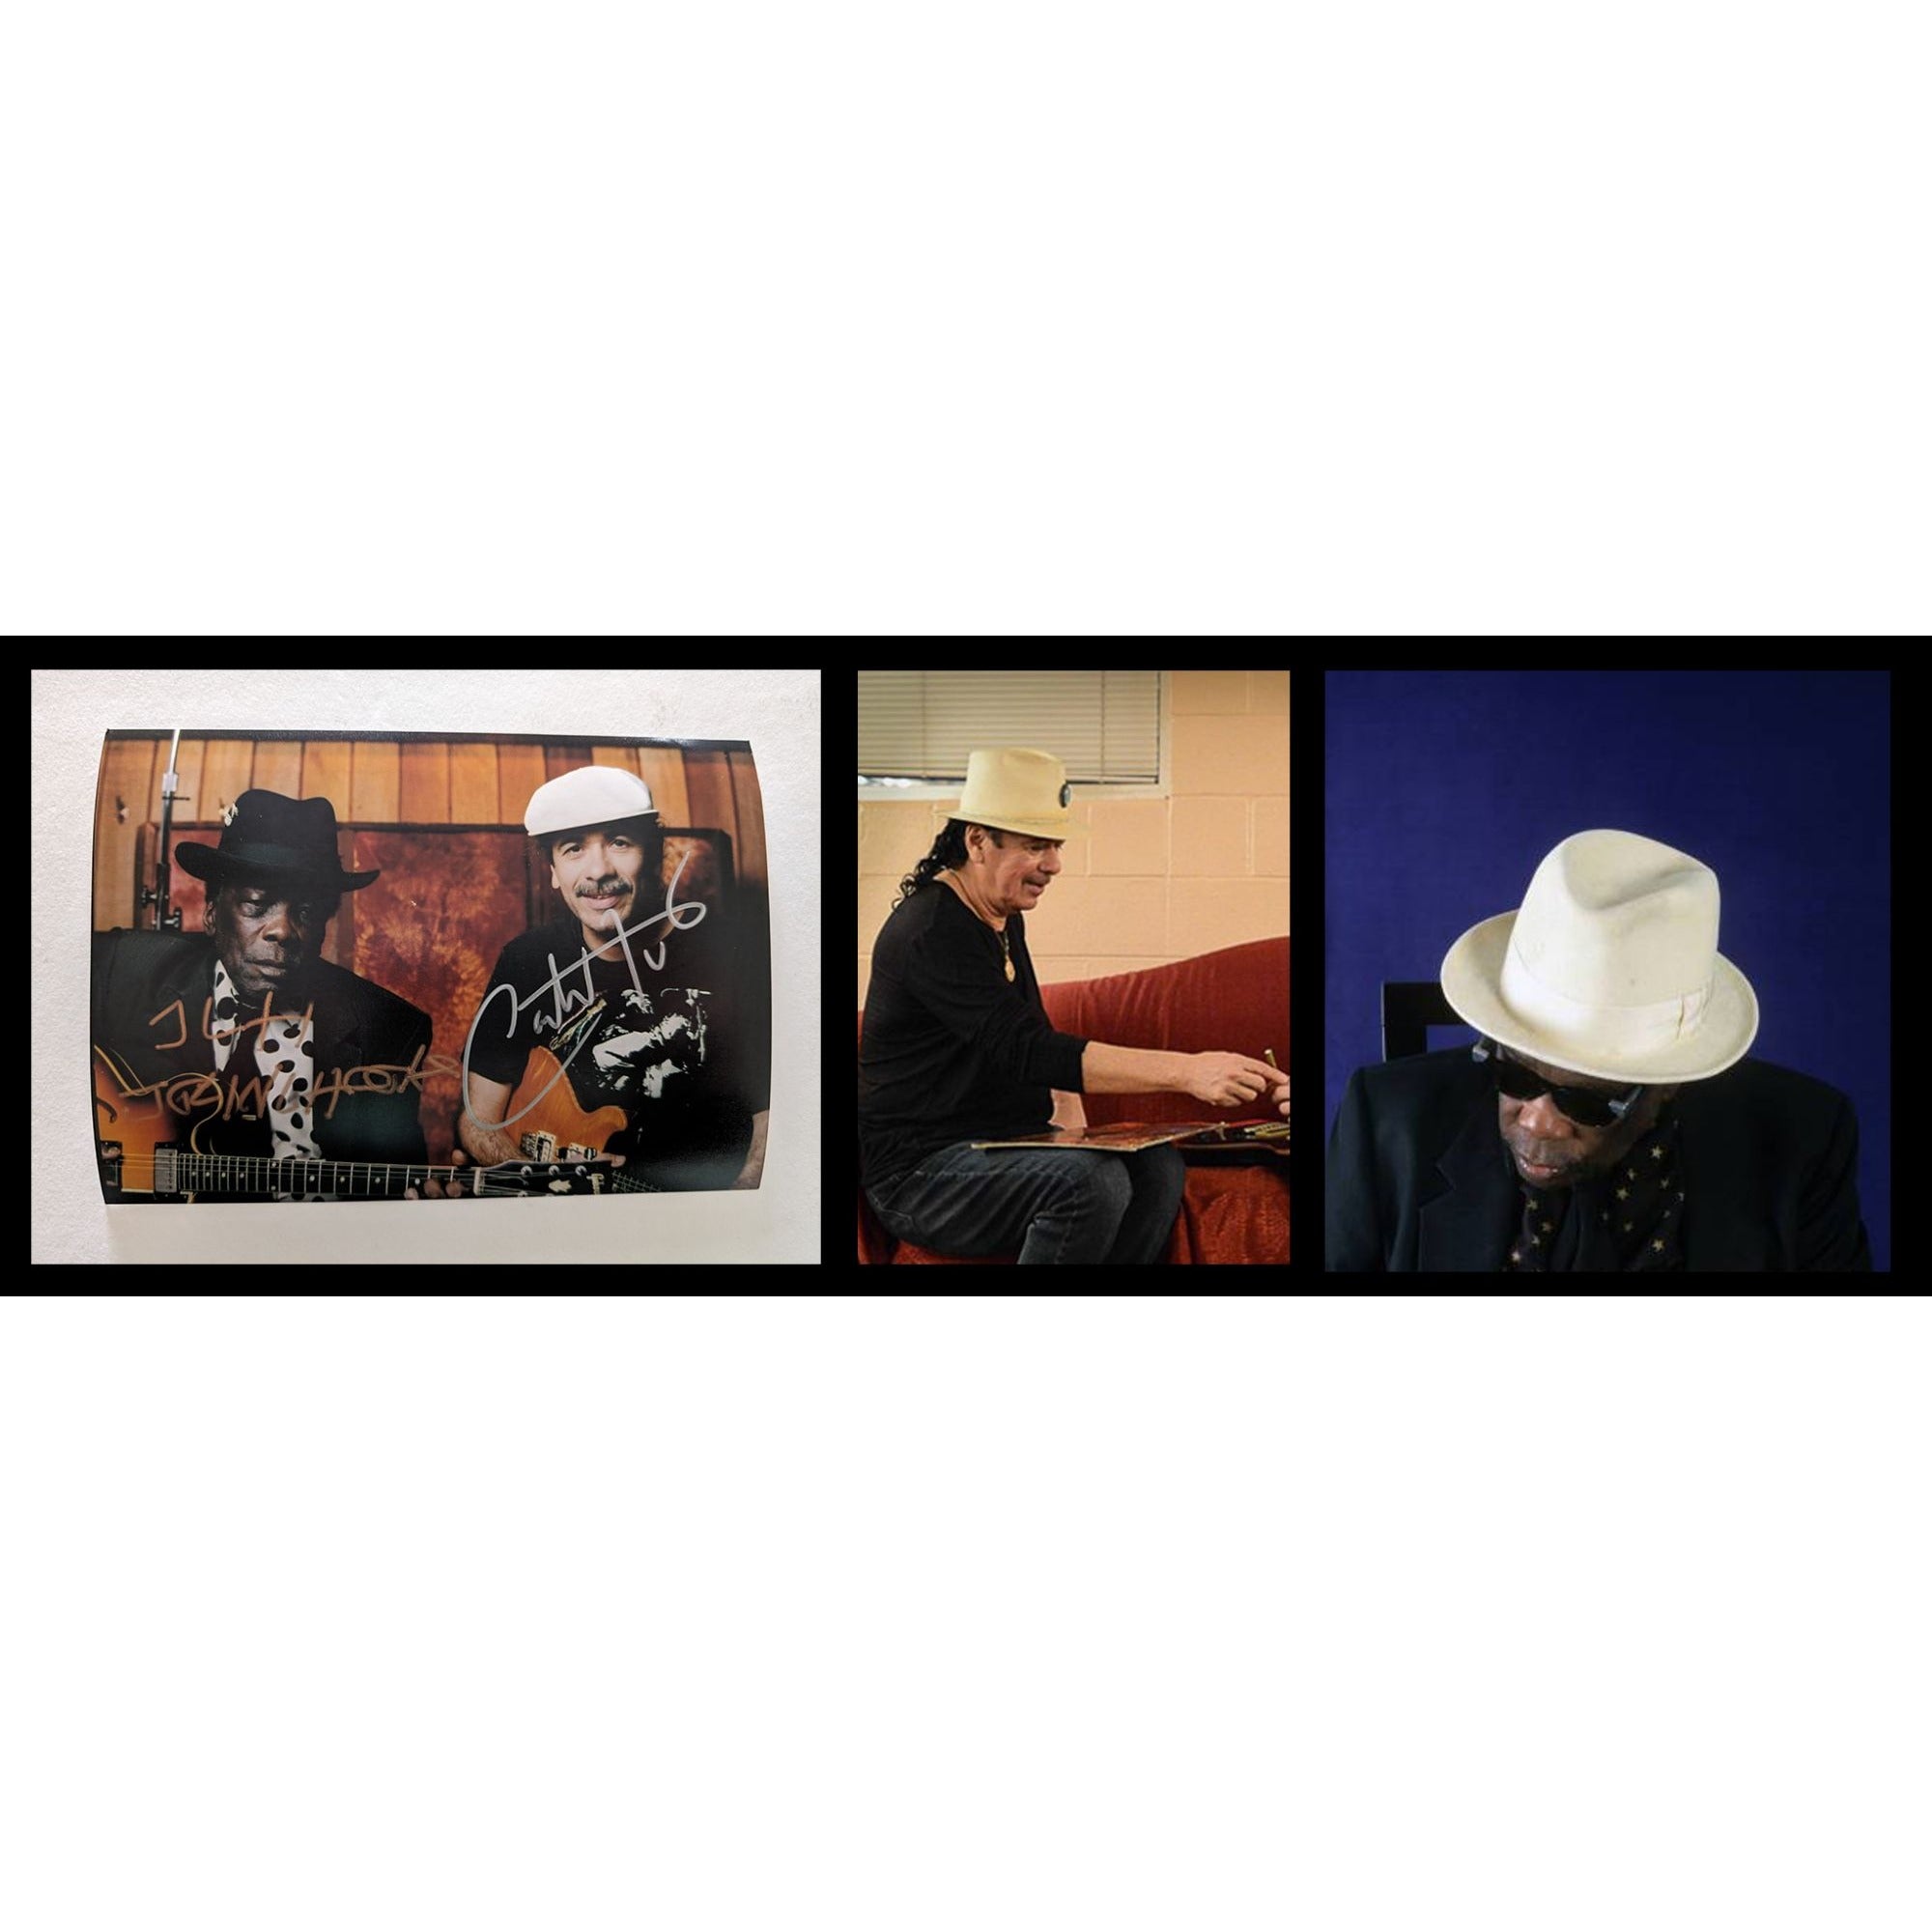 John Lee Hooker and Carlos Santana 5x7 photo signed with proof